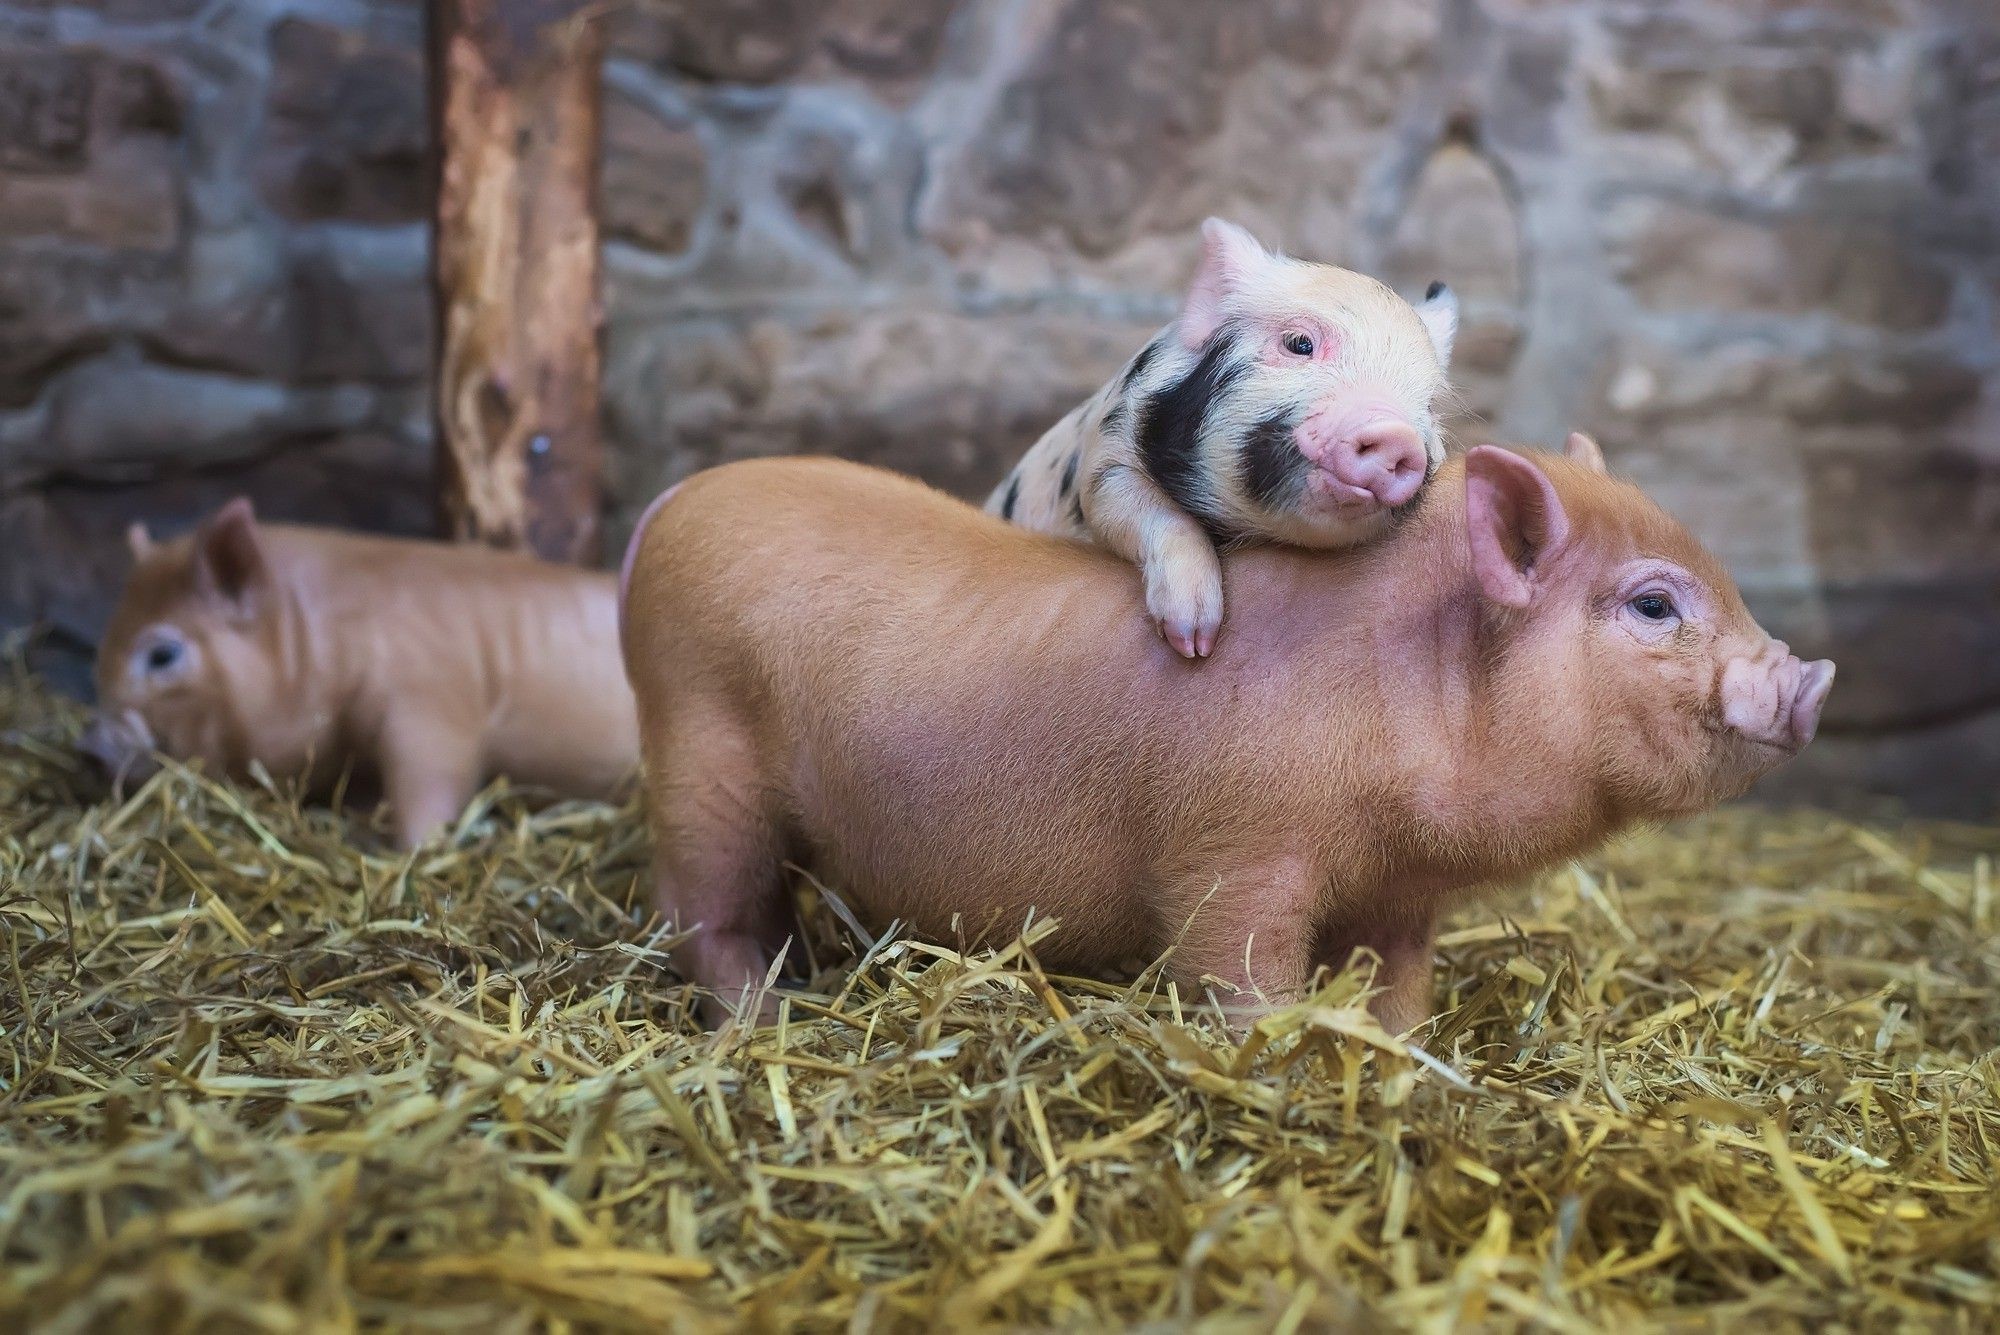 Beautiful happy animals, Piggy wallpaper, Pig pictures, Adorable farm creatures, 2000x1340 HD Desktop